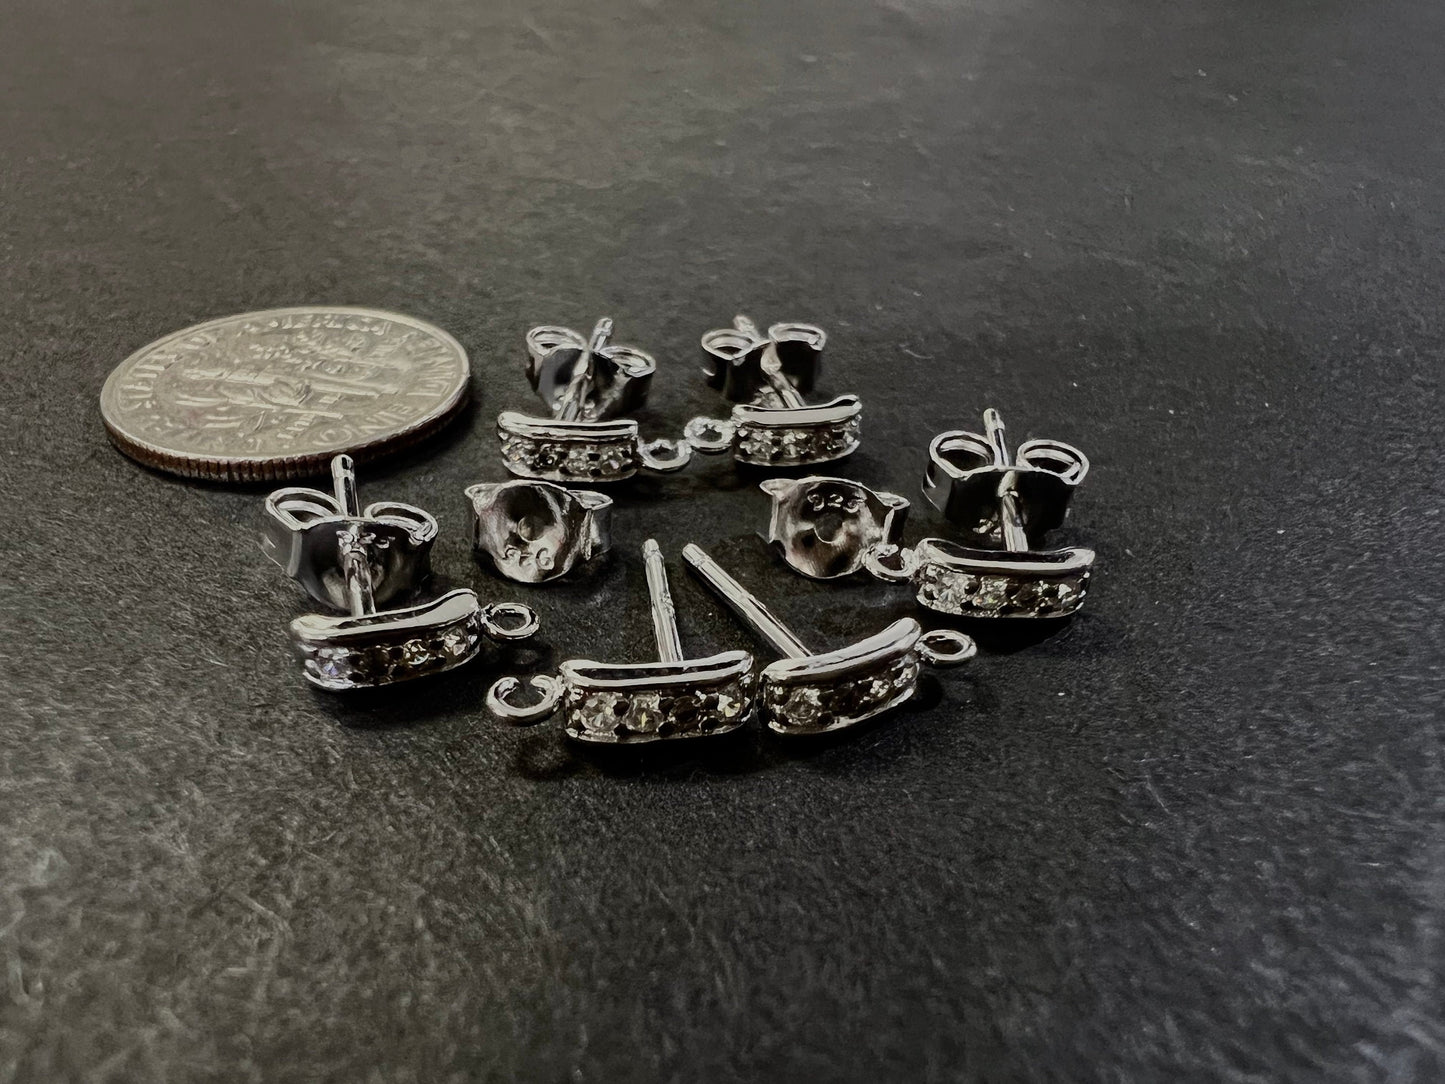 18k gold vermeil and 925 sterling silver cubic zirconia CZ diamond fancy earring post .11mm long earrings making findings.925 stamped